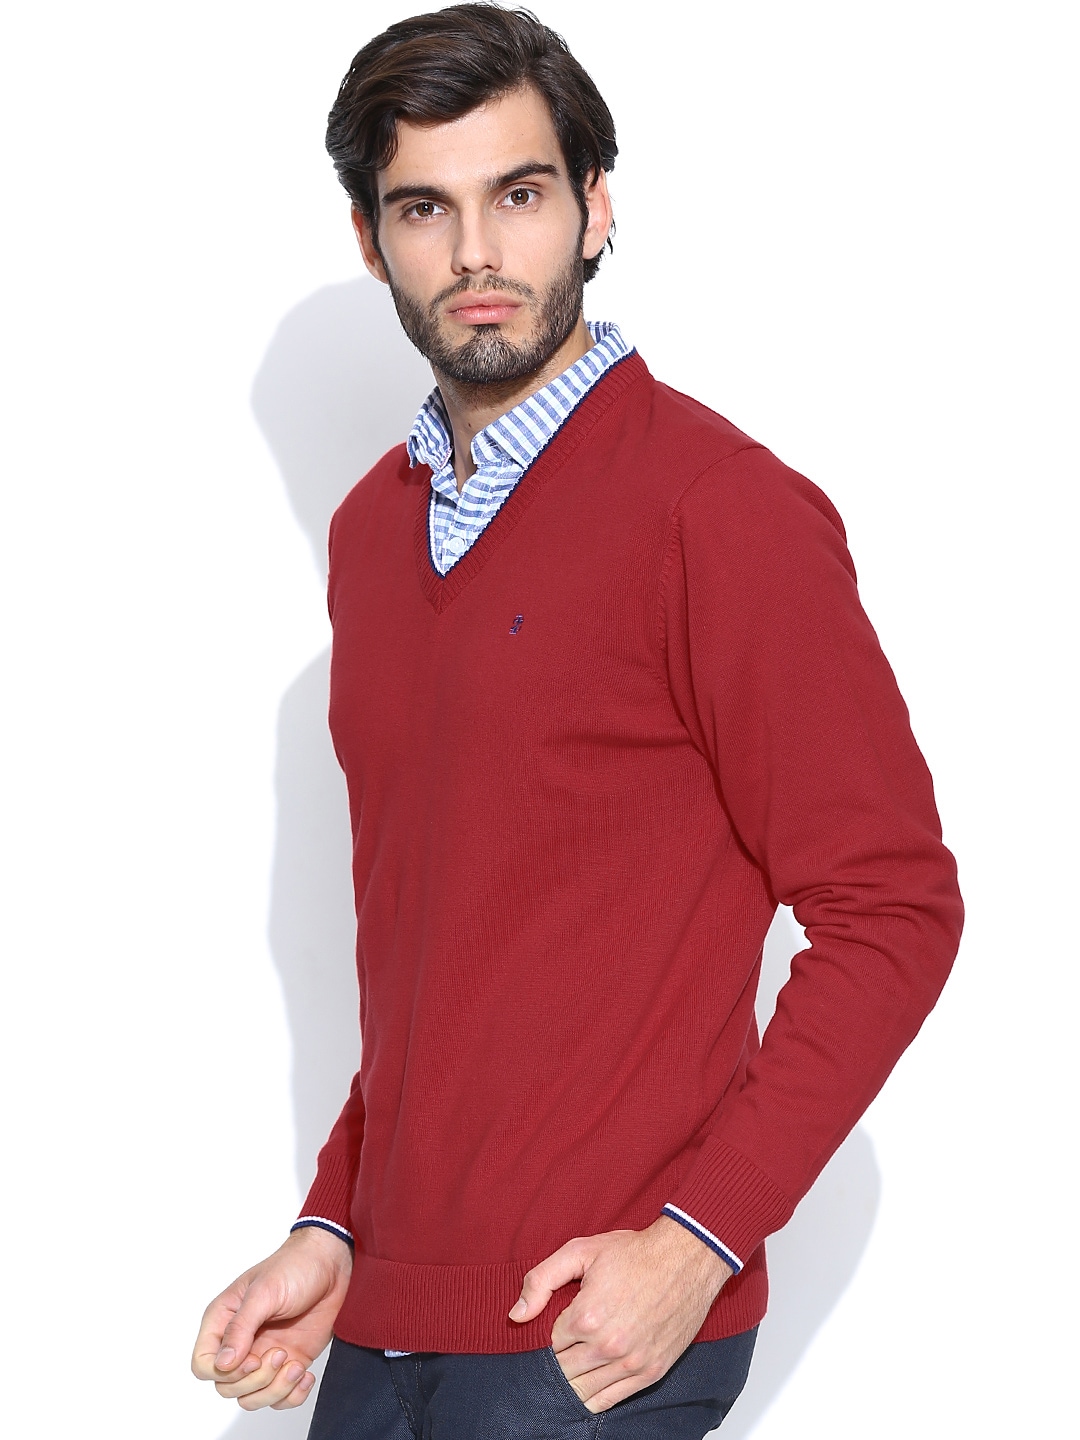 Izod Sweater Topwear - Buy Izod Sweater Topwear online in India